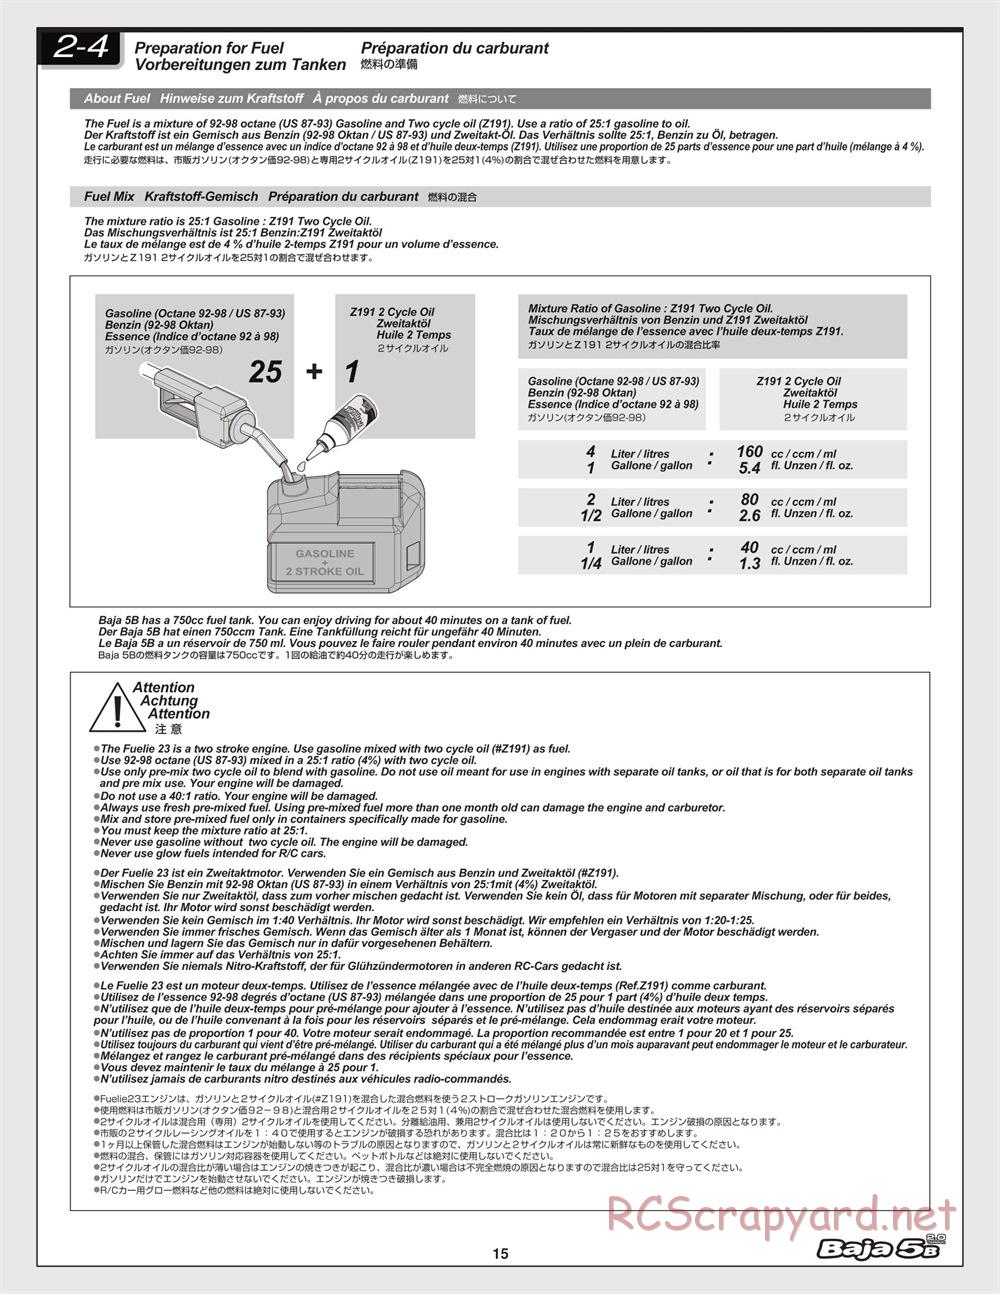 HPI - Baja 5B 2.0 - Manual - Page 15